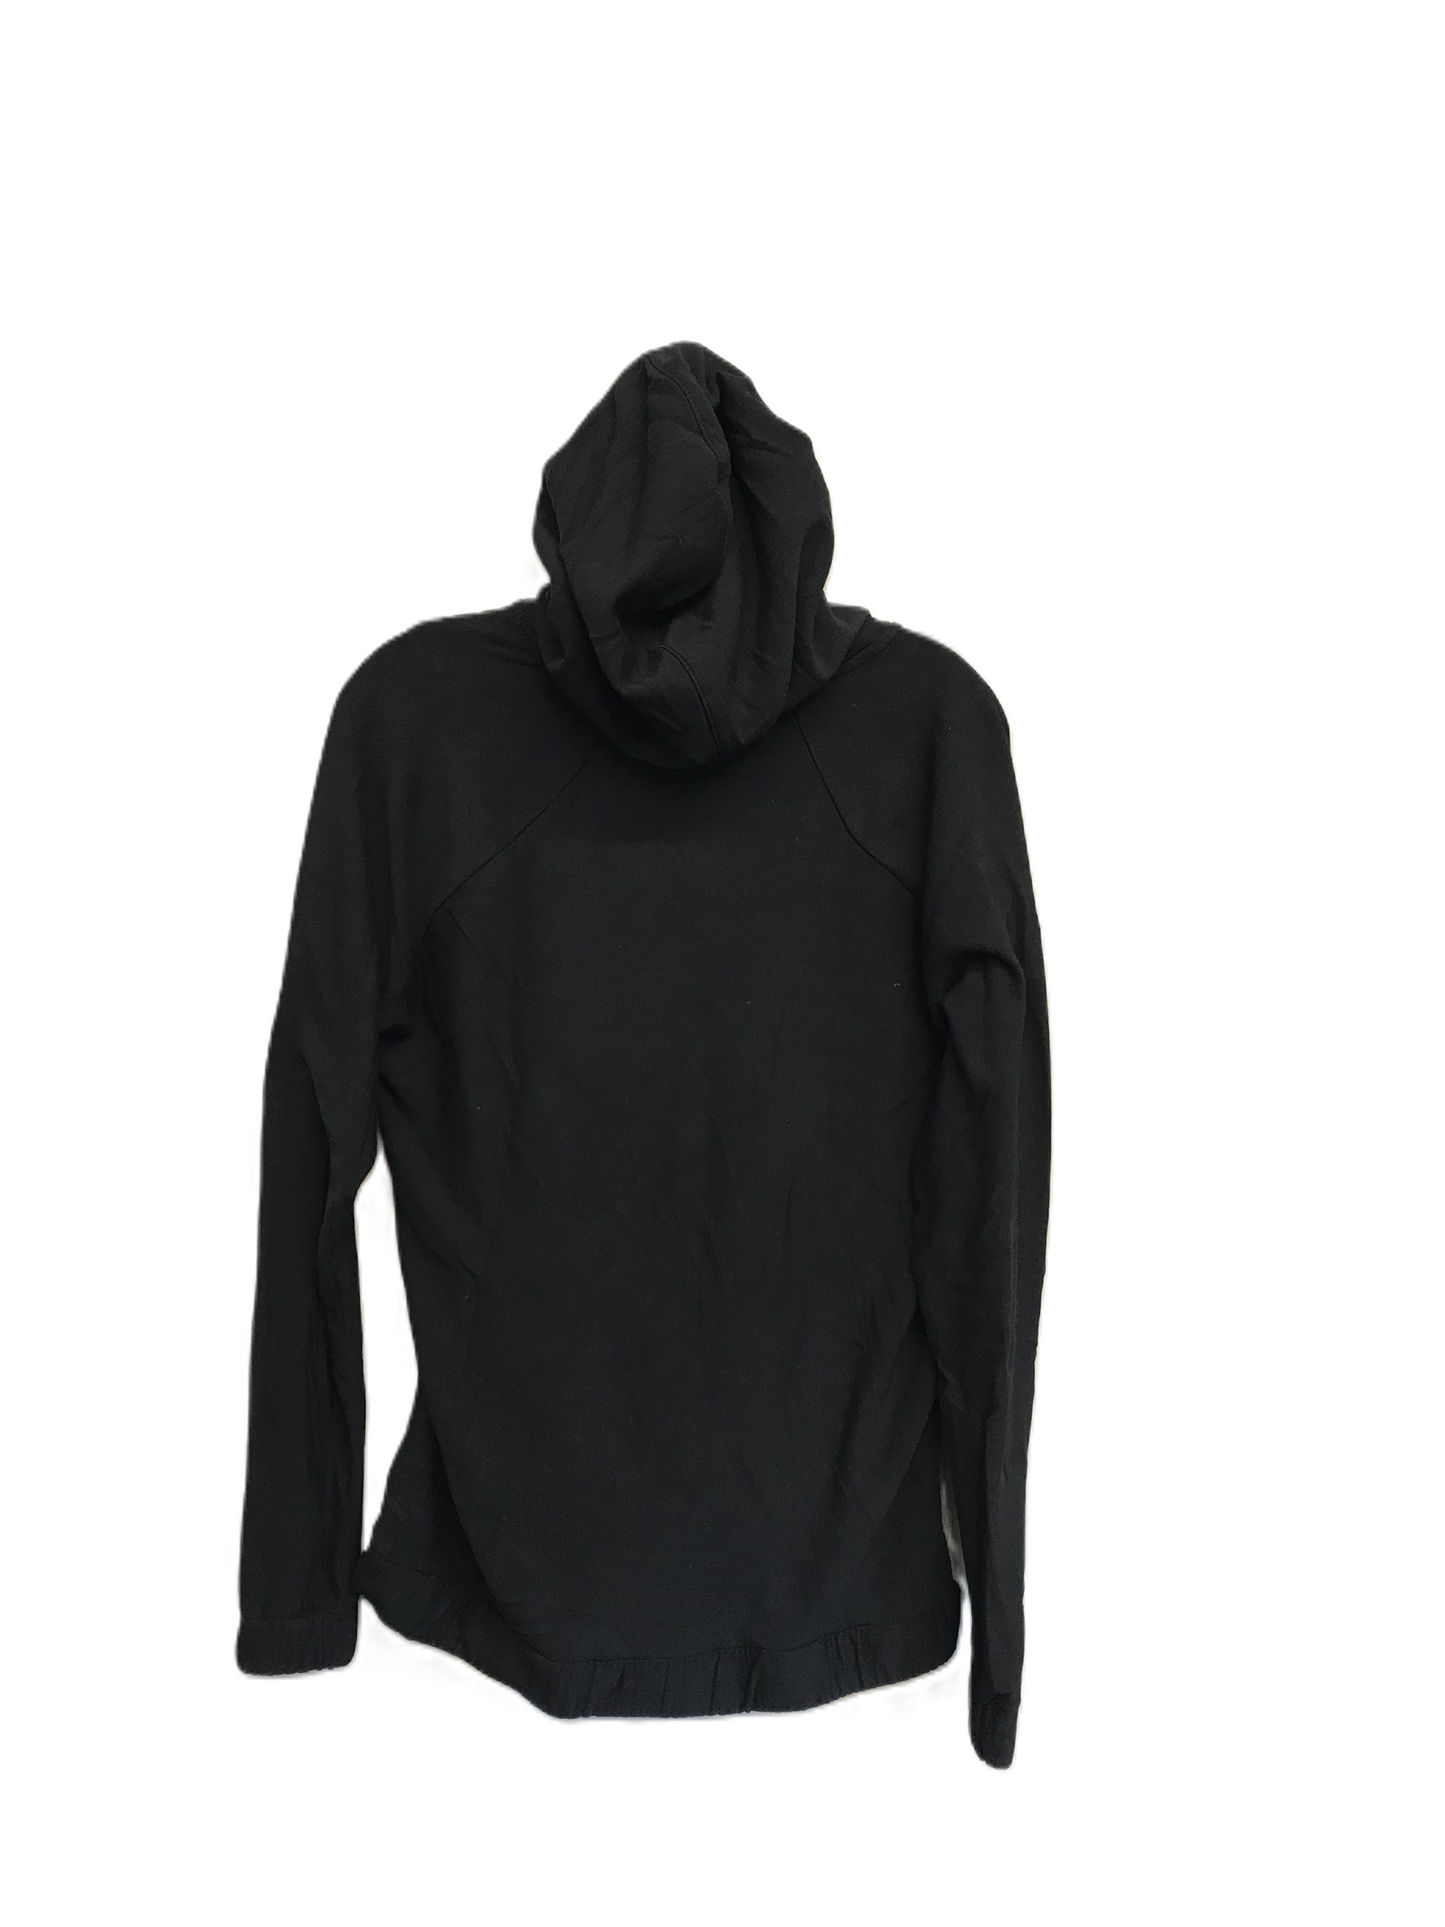 Black Athletic Top Long Sleeve Hoodie By Columbia, Size: M